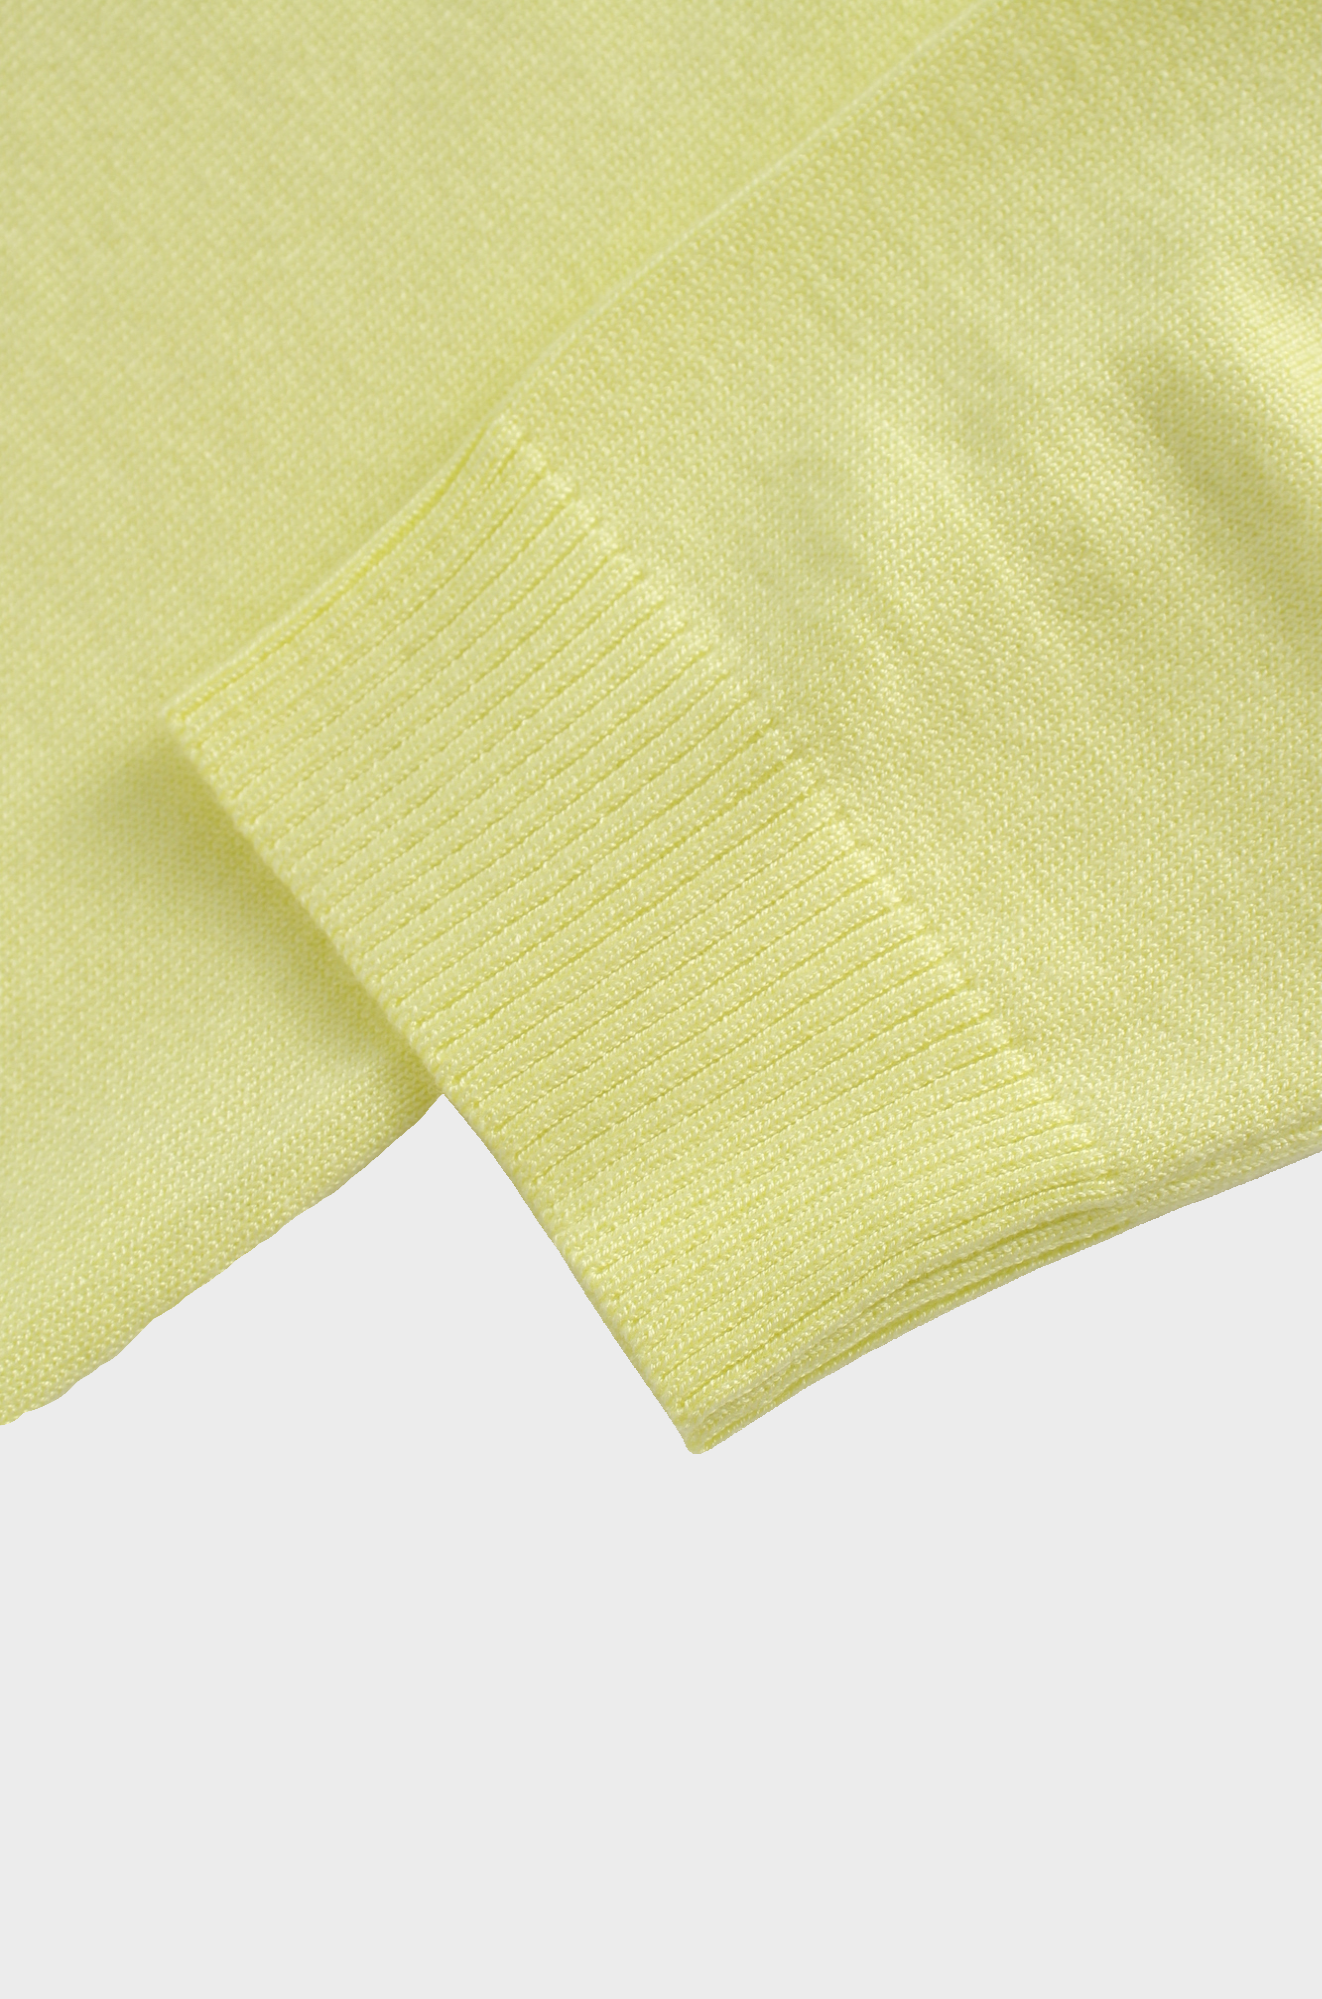 Basic Crew Sweater 3Q-Yellow